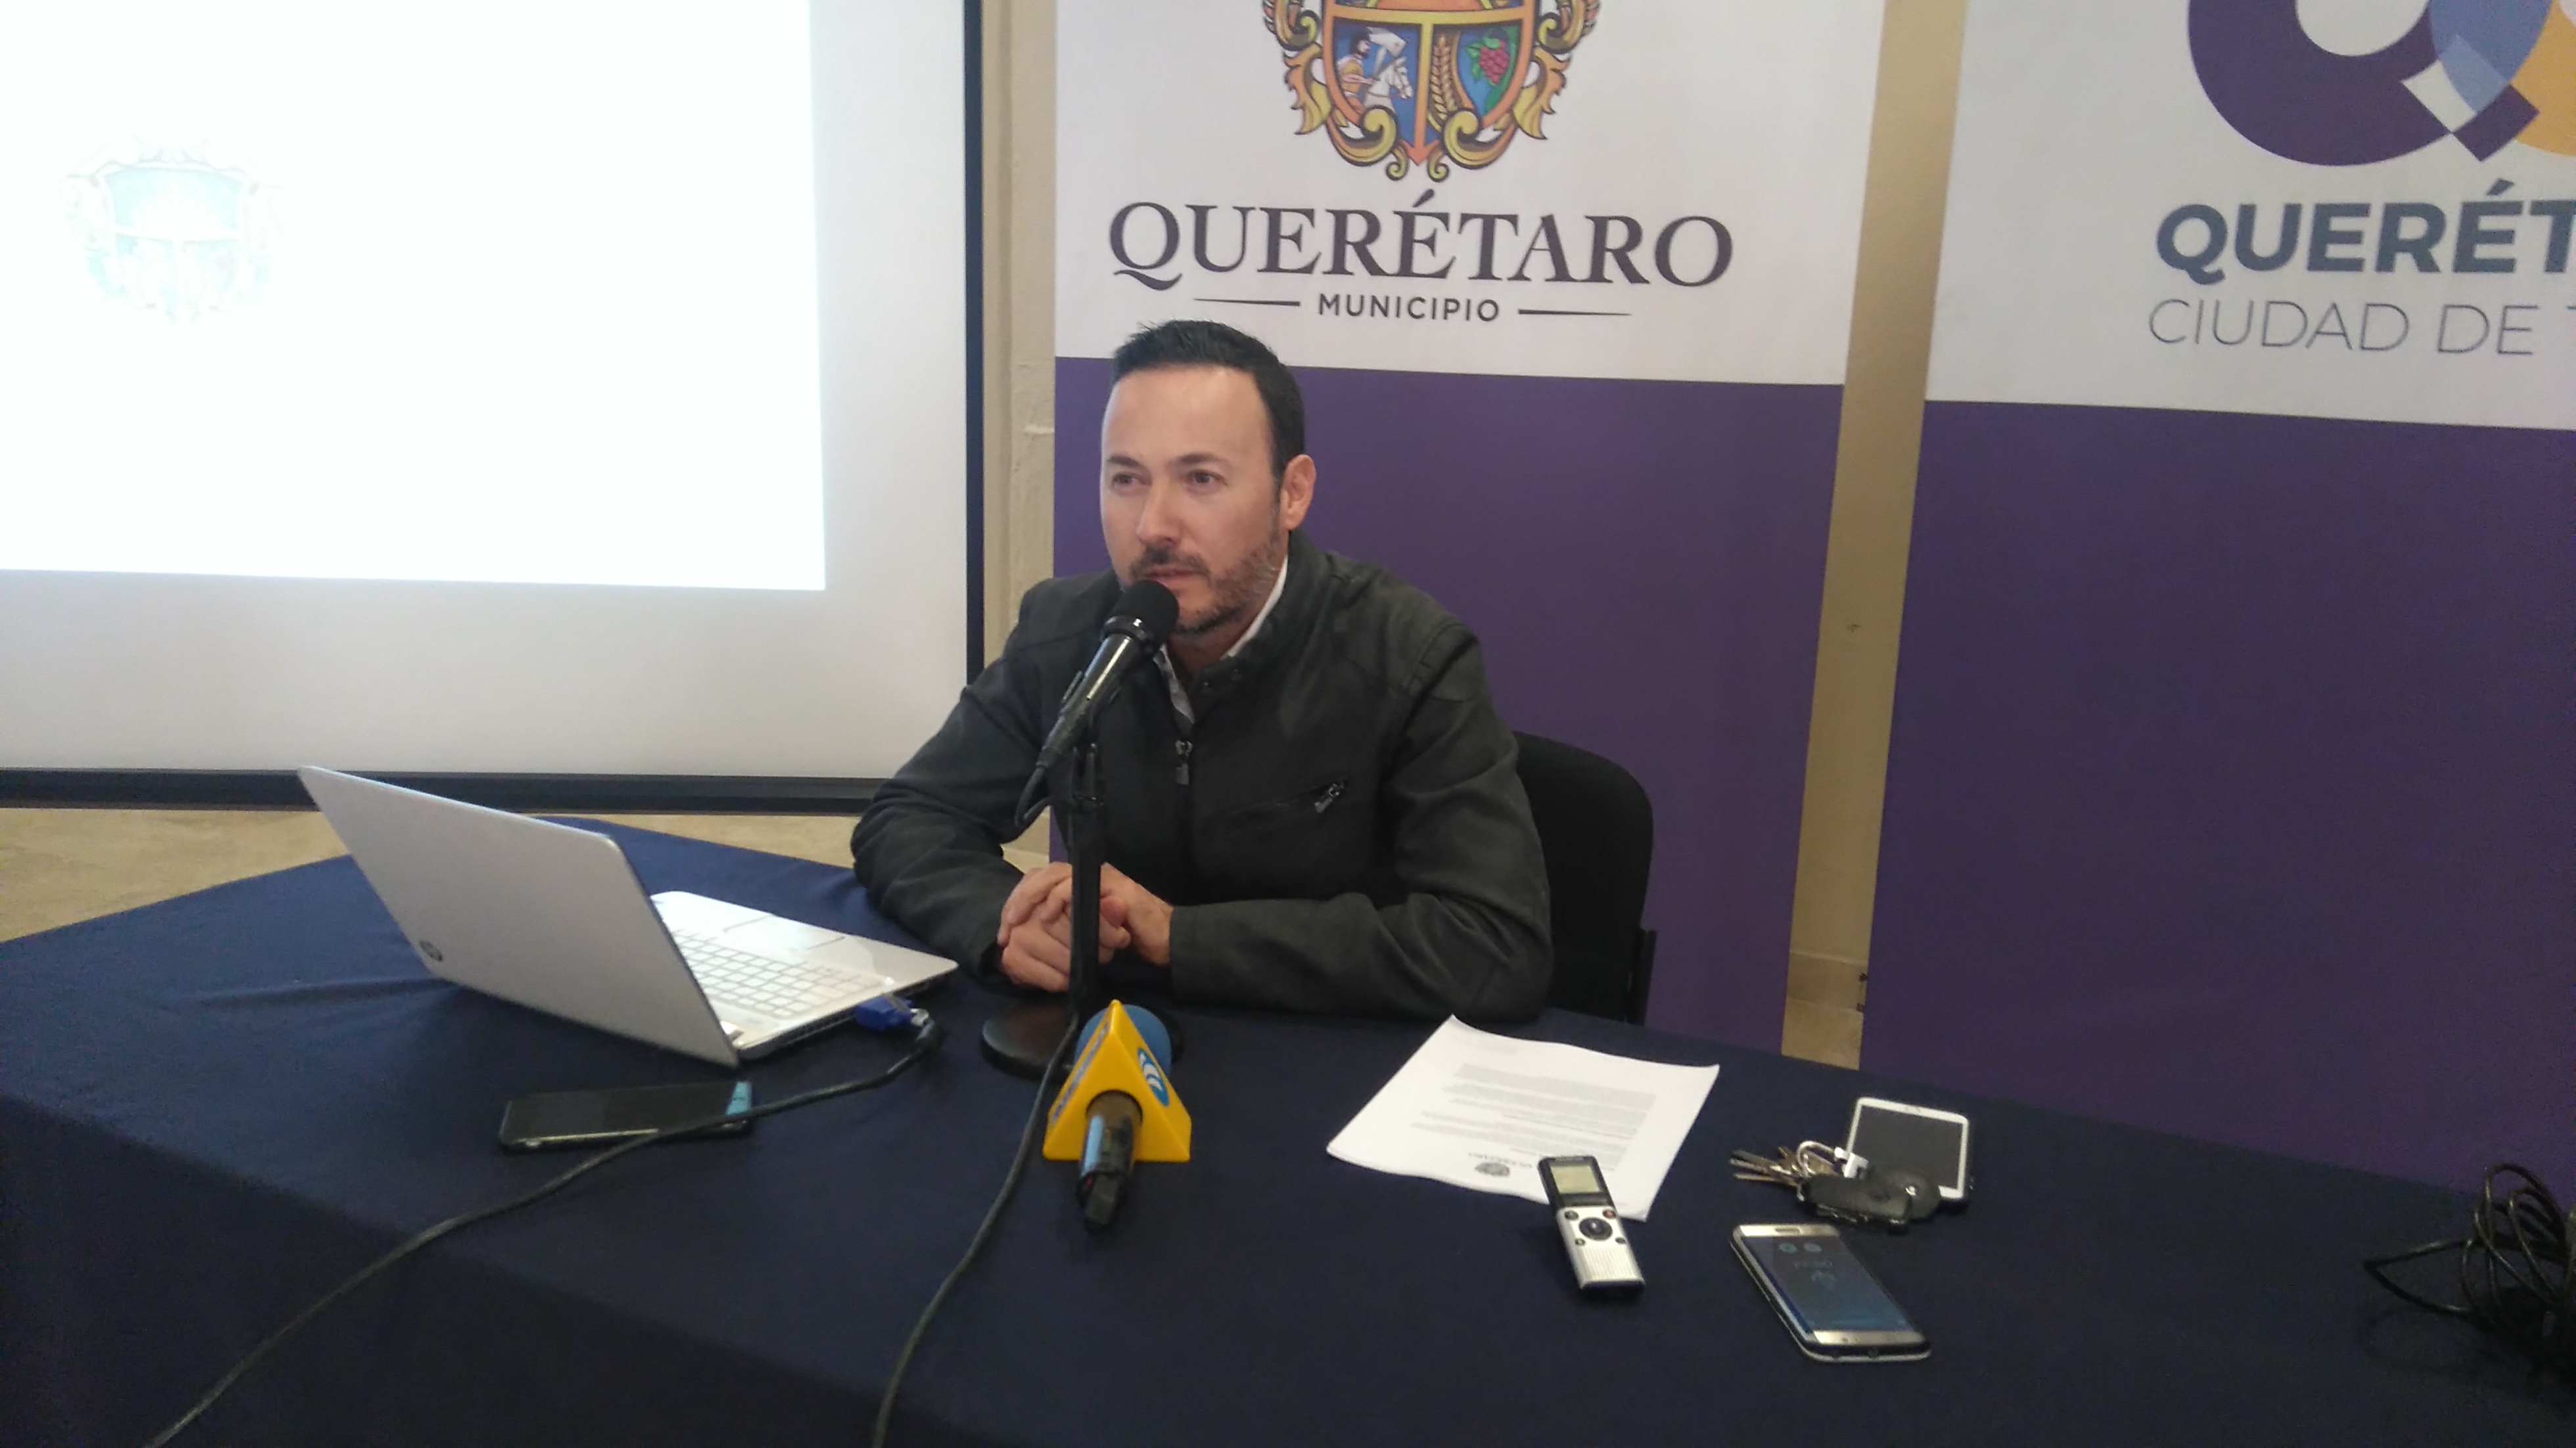  400 kilómetros de ciclovías durante 2017, compromete el municipio de Querétaro